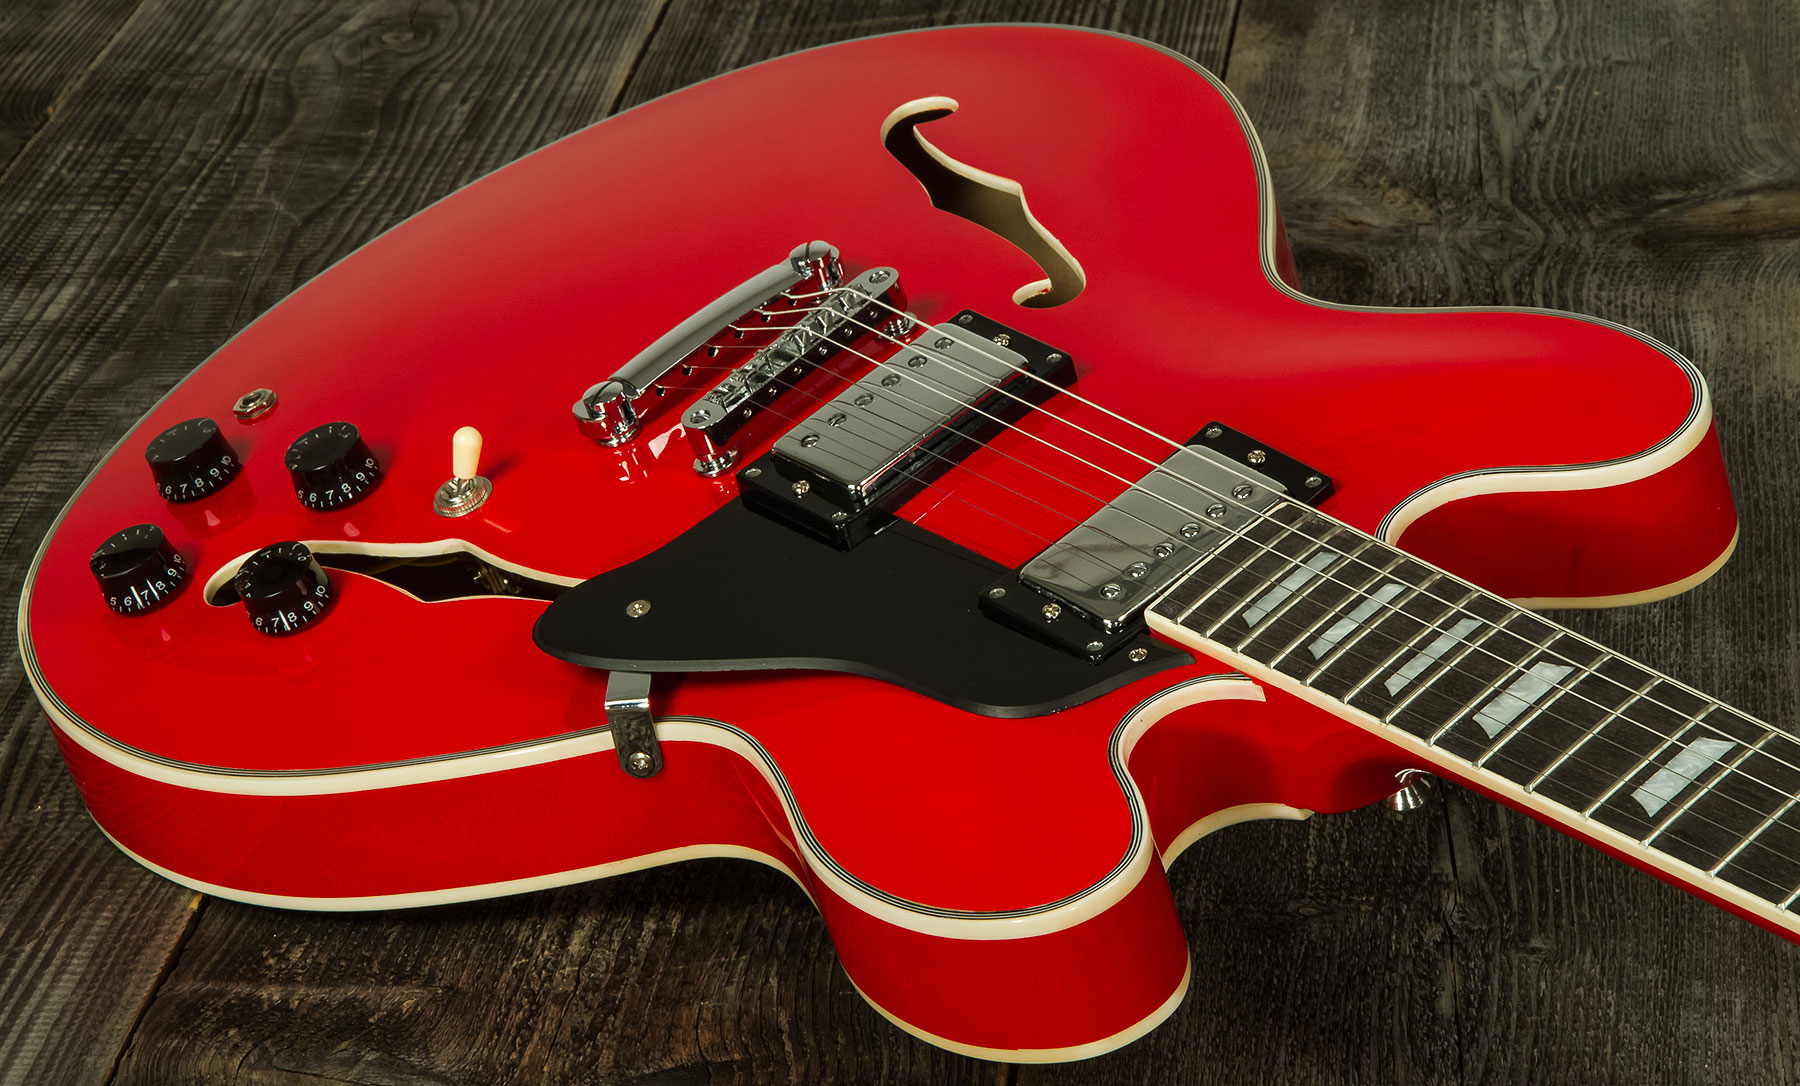 Eastone Gj70 Hh Ht Pur - Red - Semi hollow elektriche gitaar - Variation 1